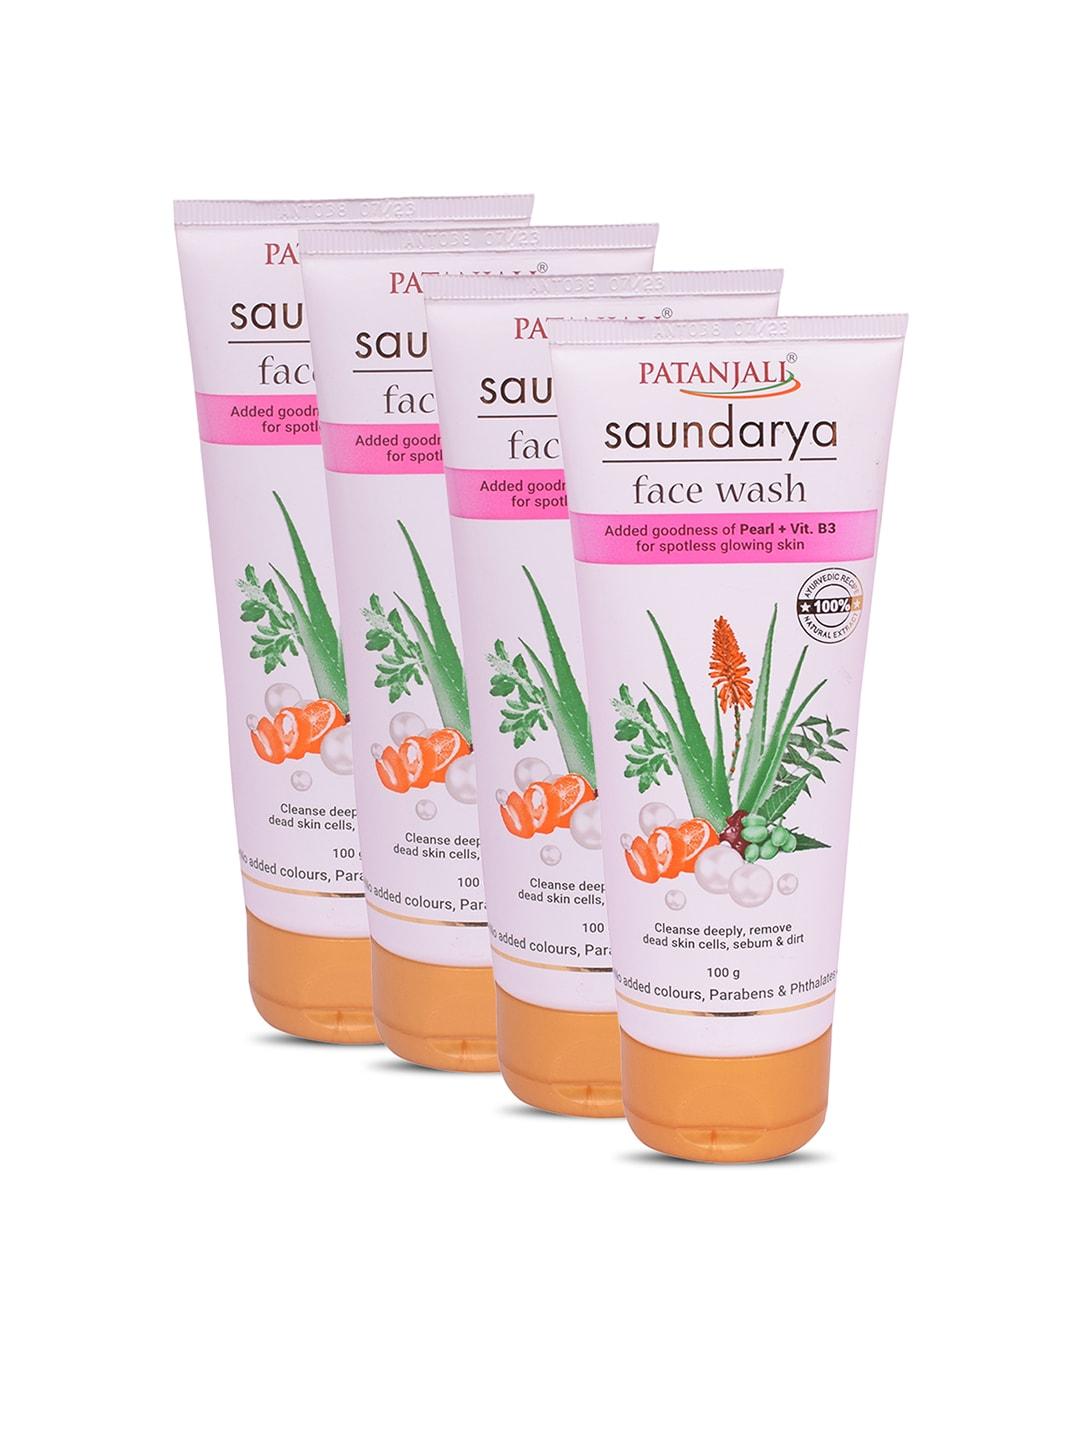 Patanjali Set of 4 Saundarya Face Wash for Fresh & Glowing Skin with Aloe Vera - 100g Each